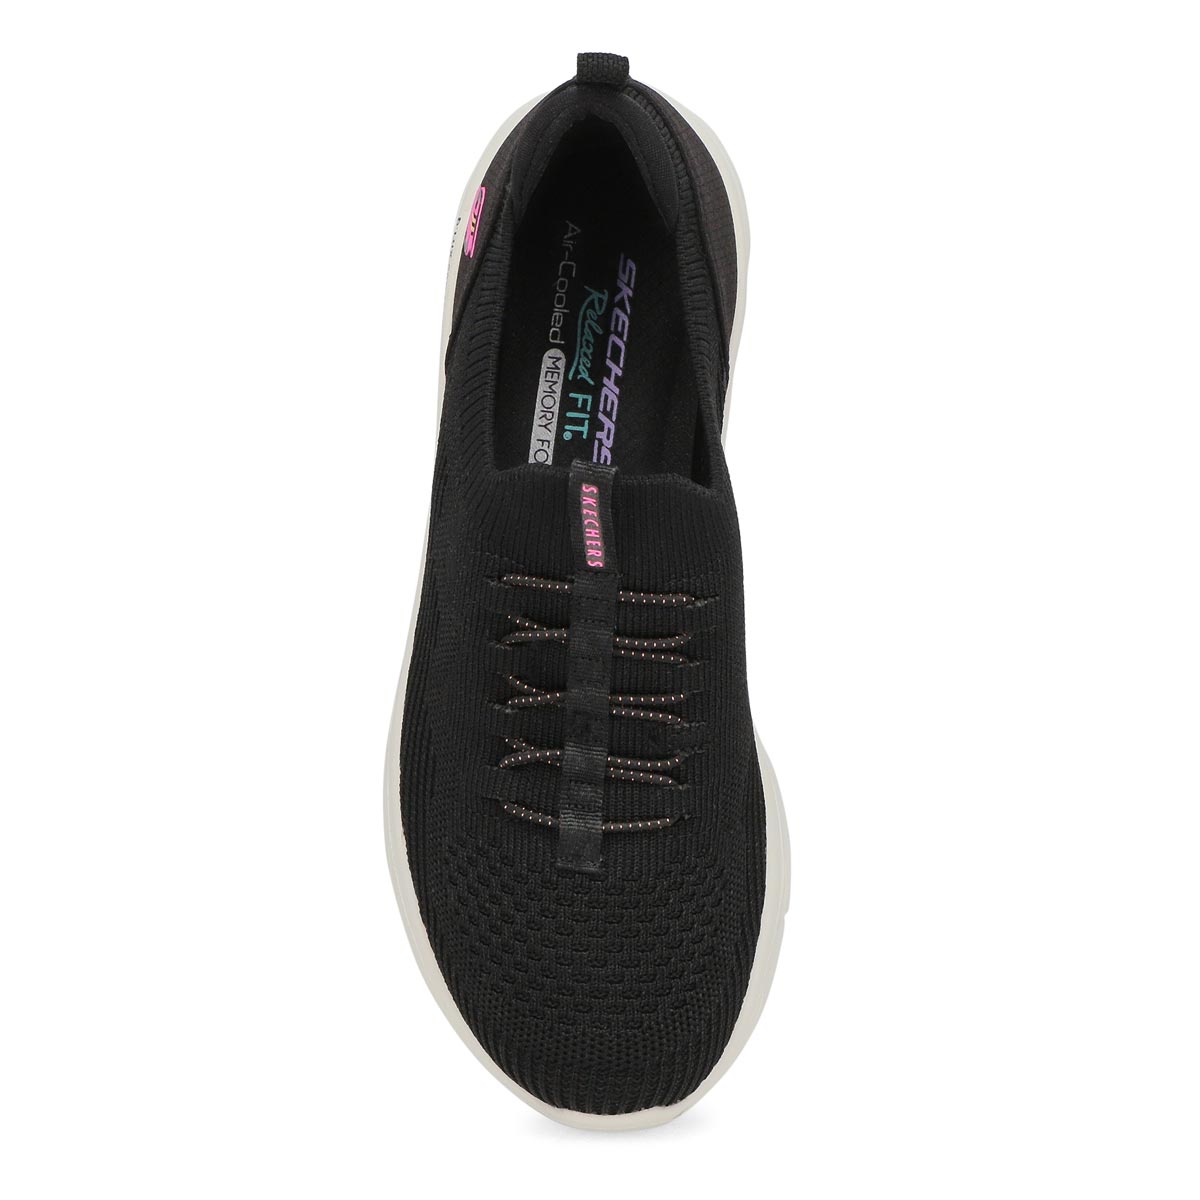 Womens D'Lux Comfort Slip On Sneaker - Black